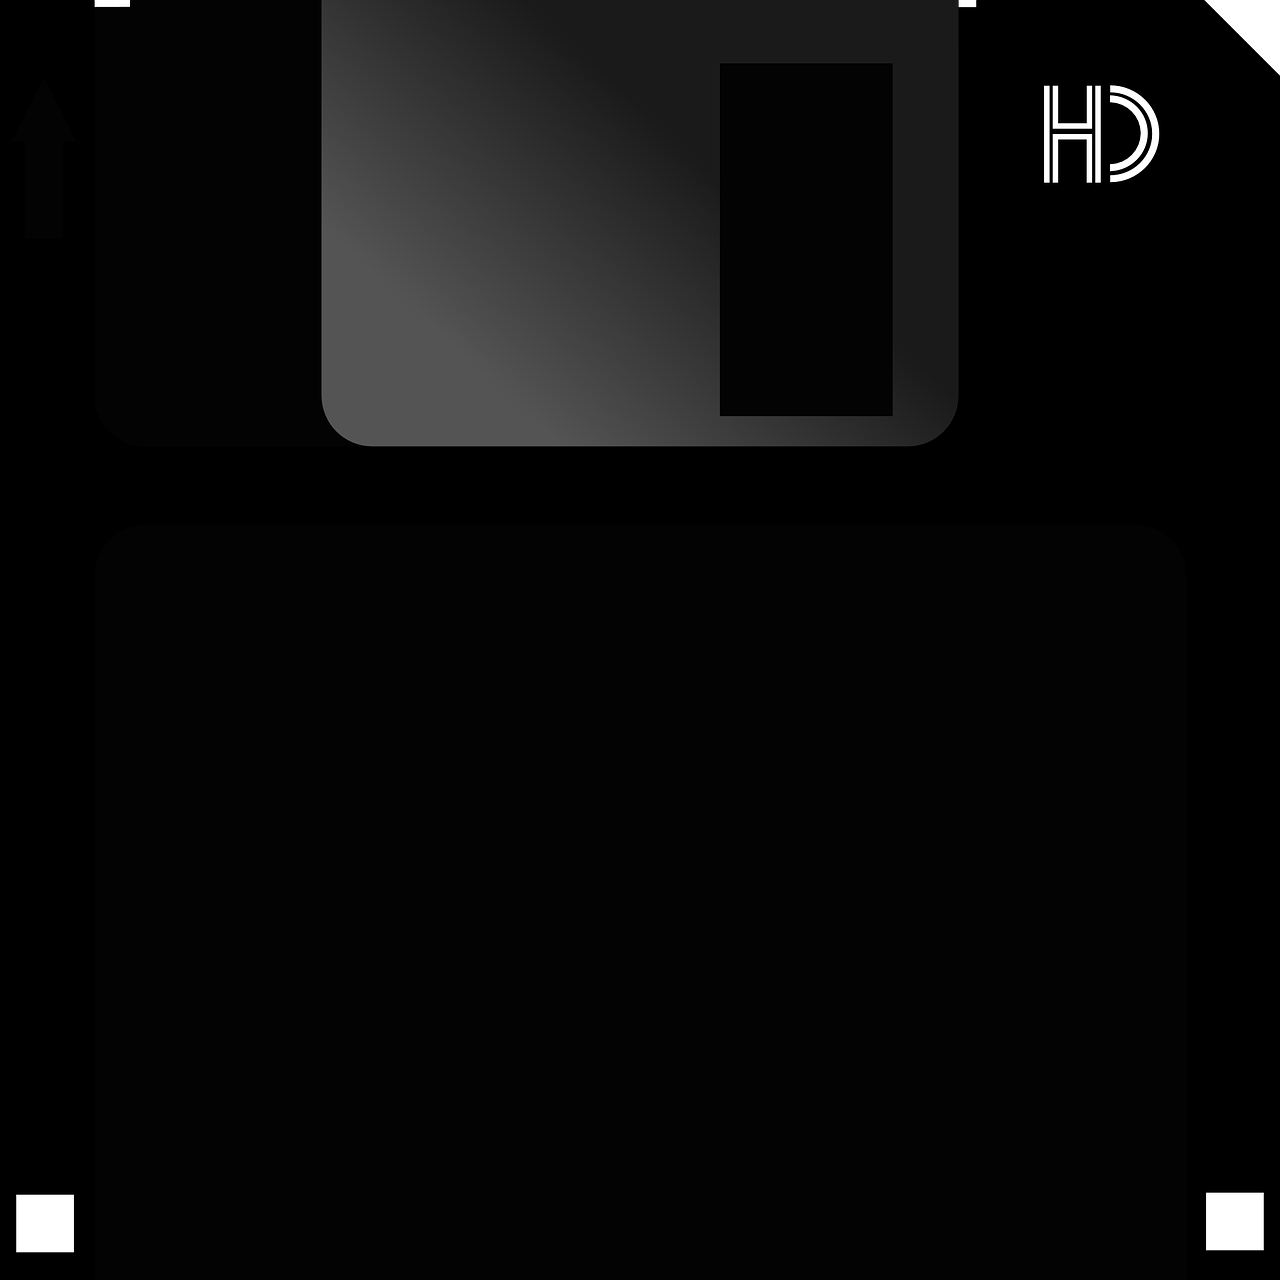 diskette disk storage free photo